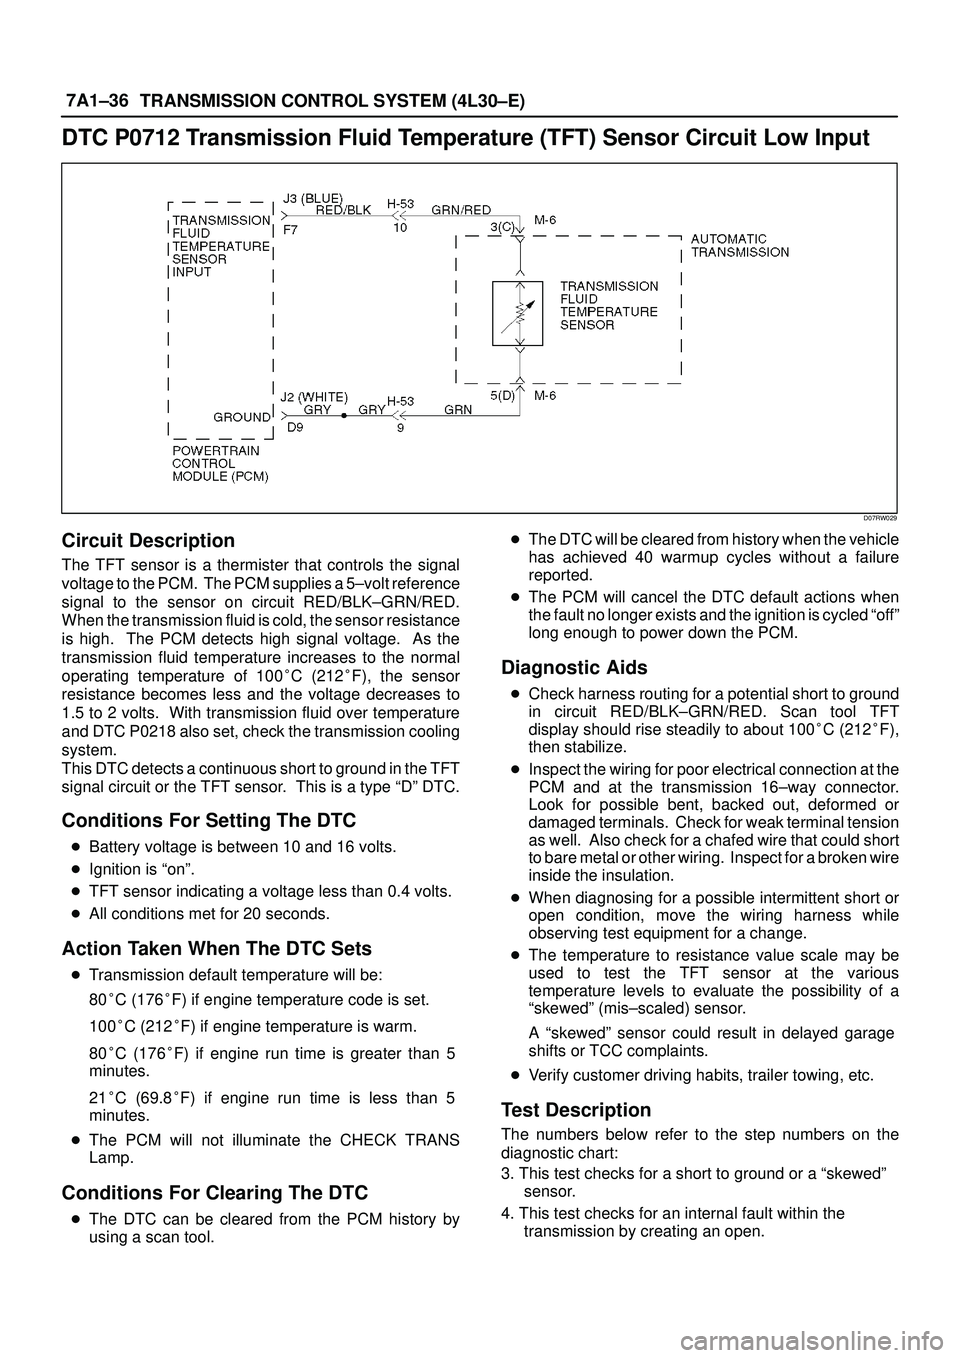 ISUZU TROOPER 1998  Service Repair Manual 7A1±36
TRANSMISSION CONTROL SYSTEM (4L30±E)
DTC P0712 Transmission Fluid Temperature (TFT) Sensor Circuit Low Input
D07RW029
Circuit Description
The TFT sensor is a thermister that controls the sign